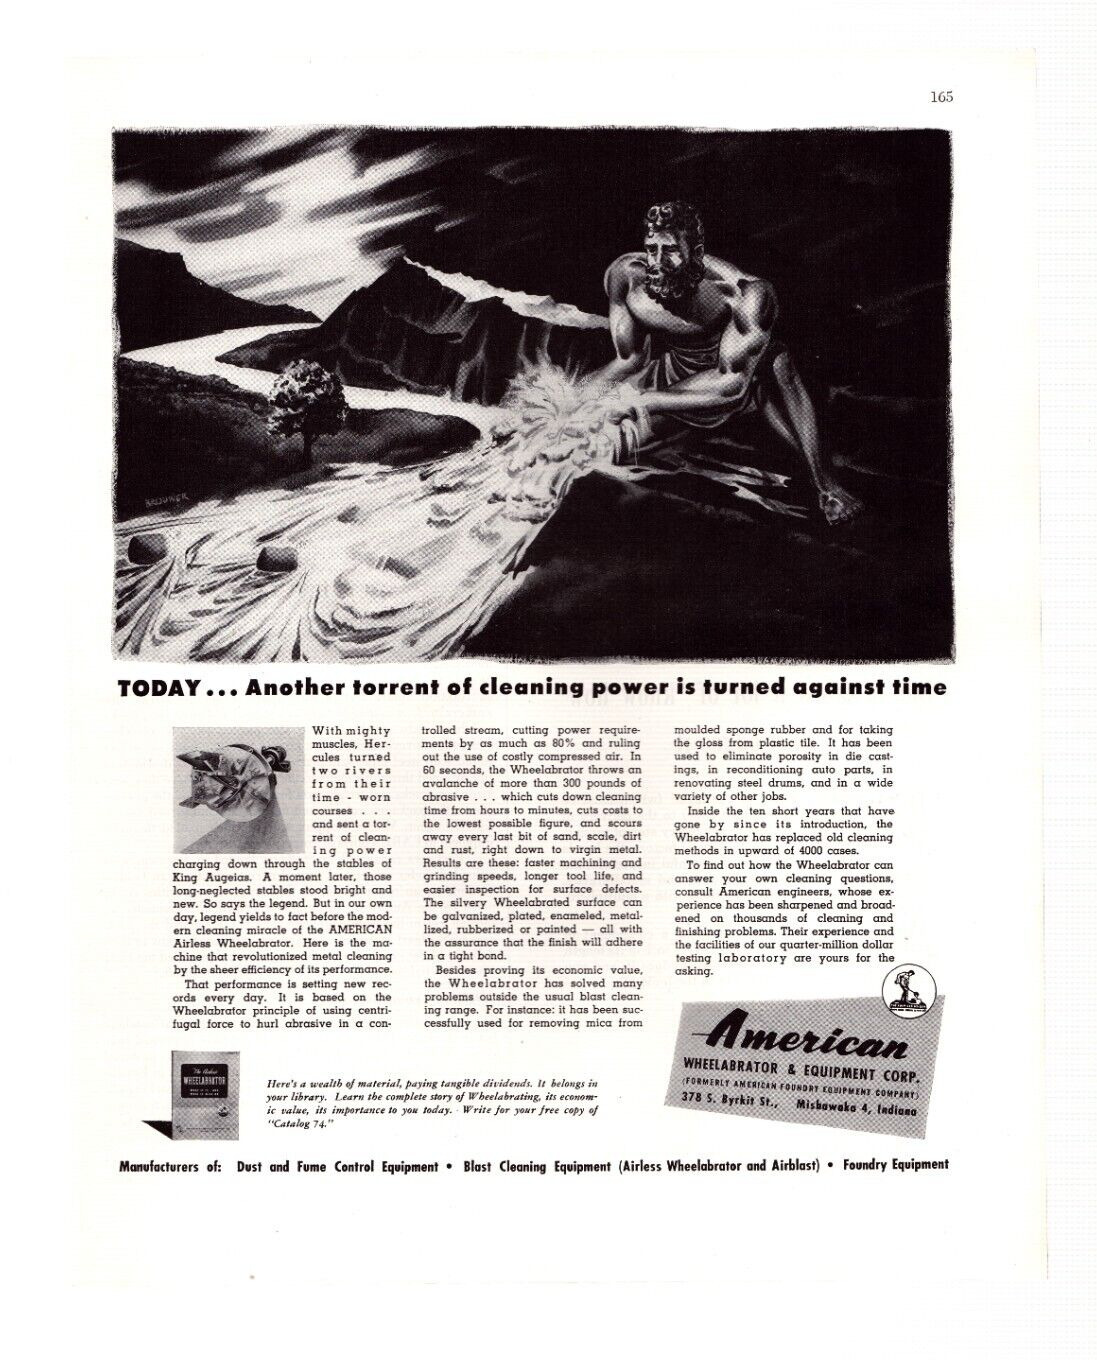 Vtg Print Ad 1947 American Wheelabrator Equipment Corporation Mishawaka Indiana